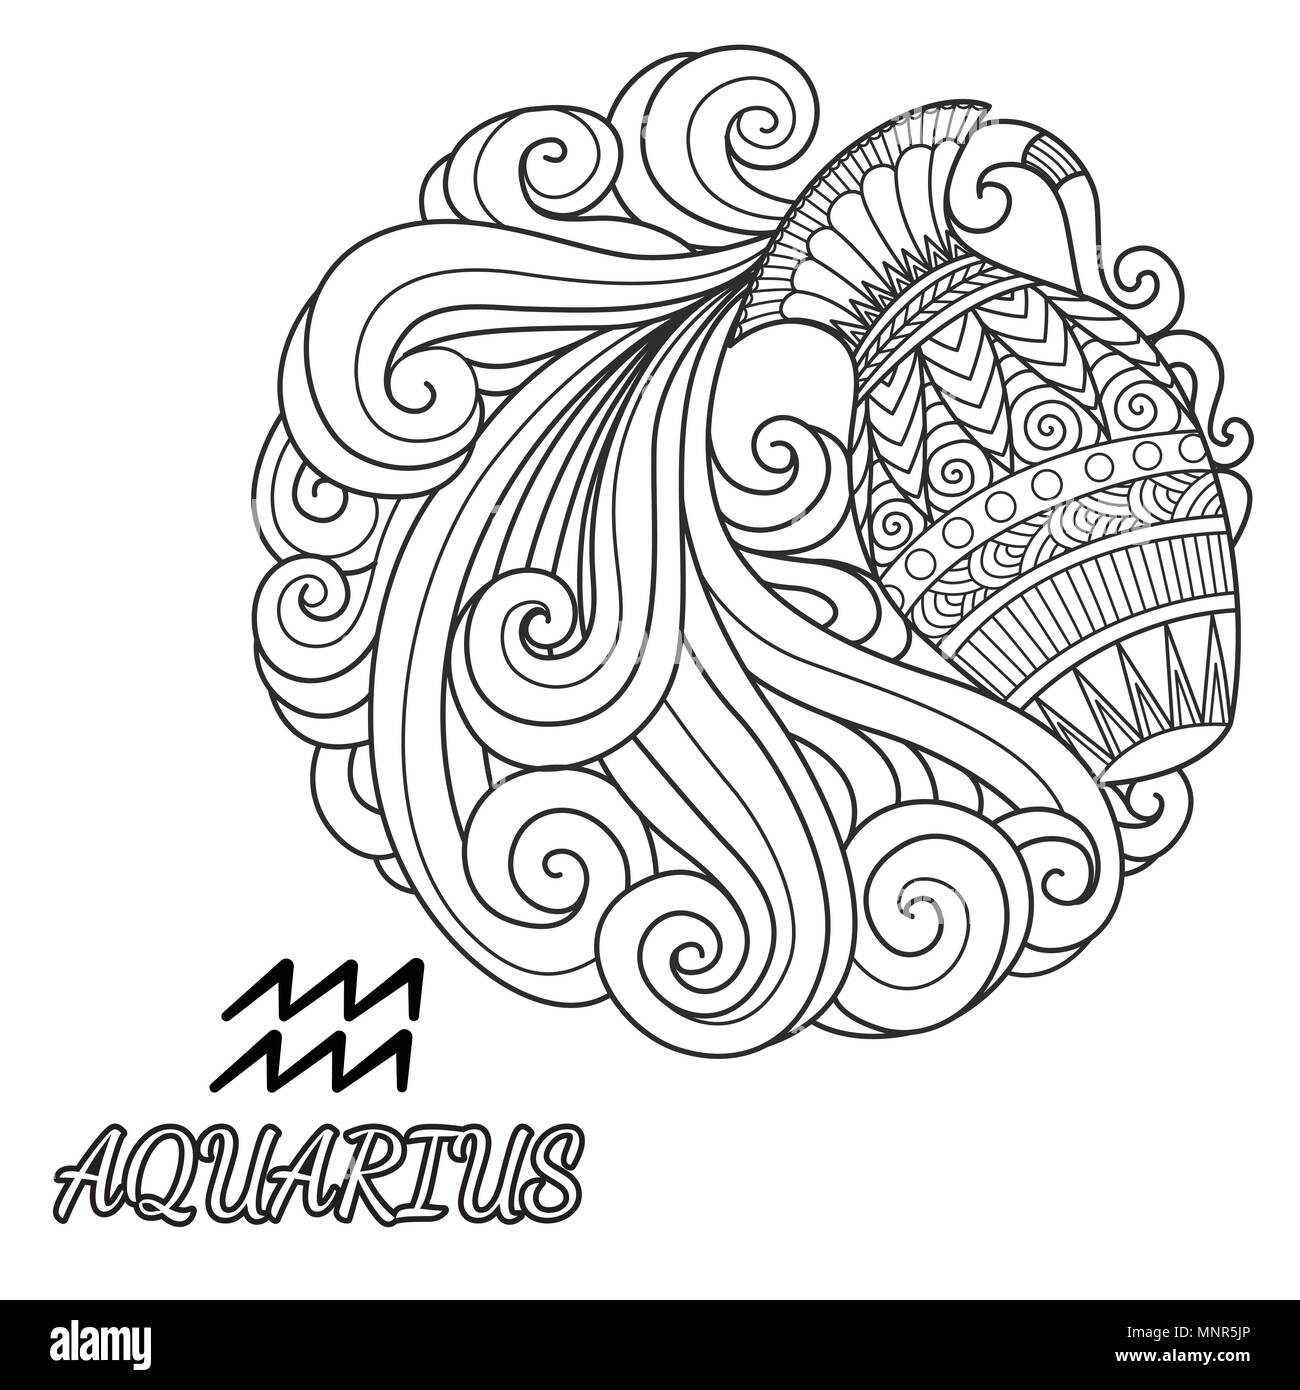 Line art design of Aquarius zodiac sign for design element and coloring